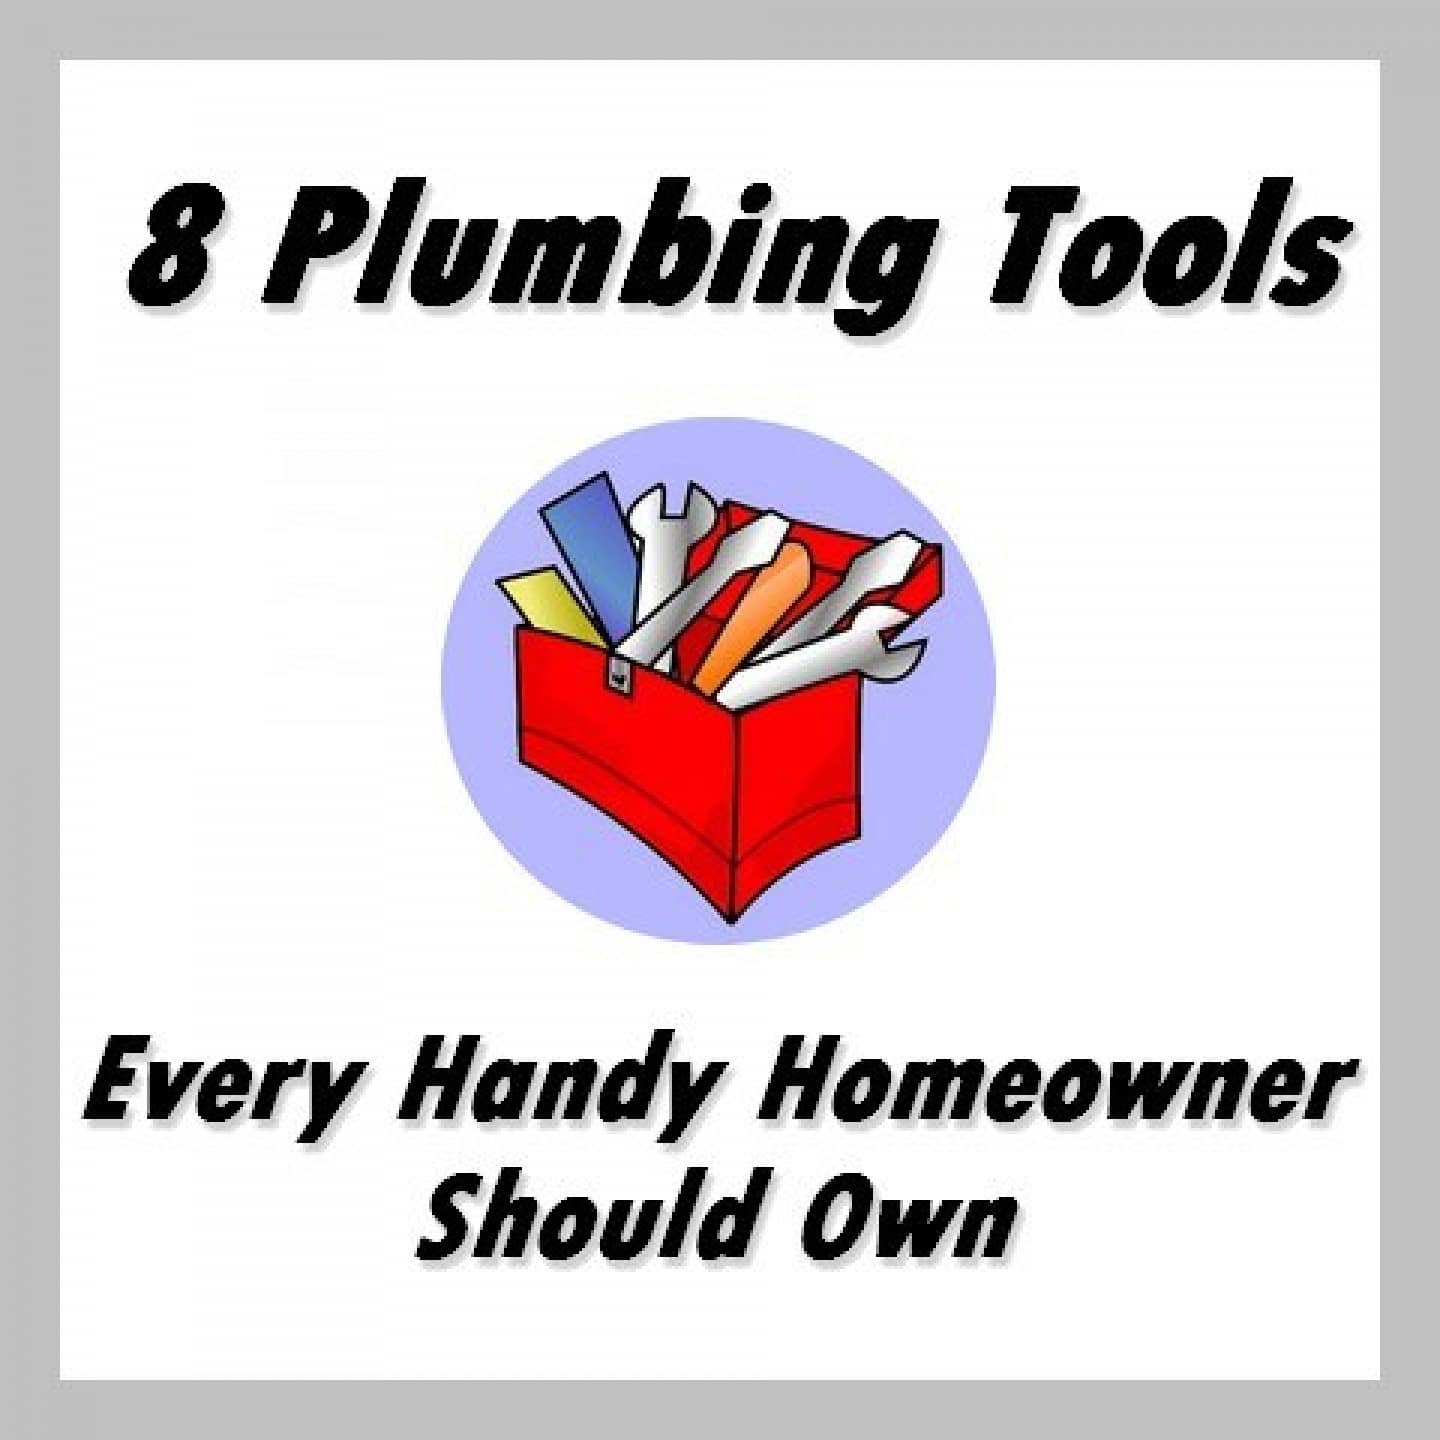 8 plumbing tools